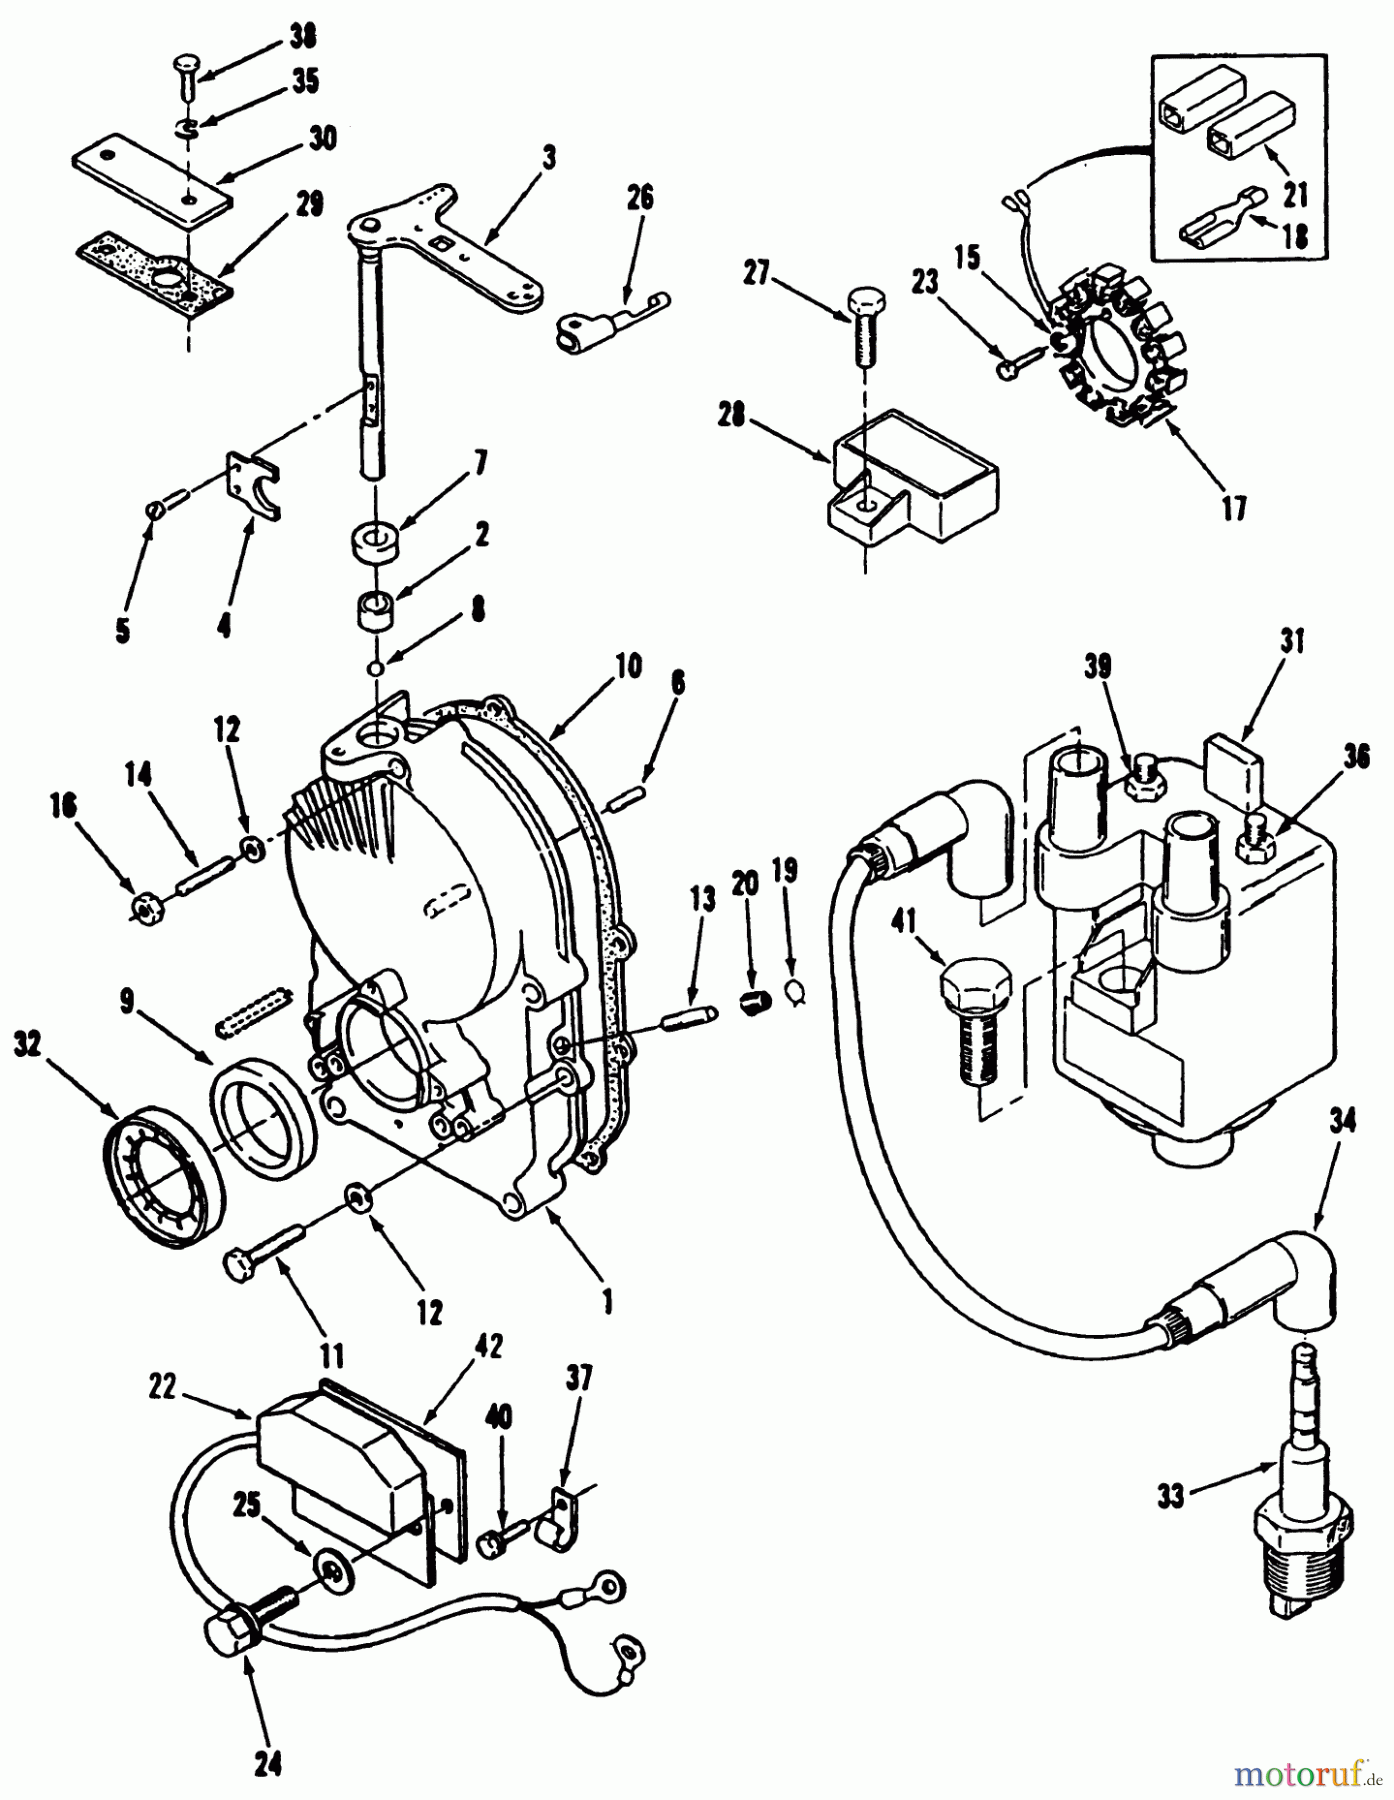  Toro Neu Mowers, Lawn & Garden Tractor Seite 1 31-12K804 (312-8) - Toro 312-8 Garden Tractor, 1992 (2000001-2999999) GEARCASE AND IGNITION CONTROLS POWER PLUS